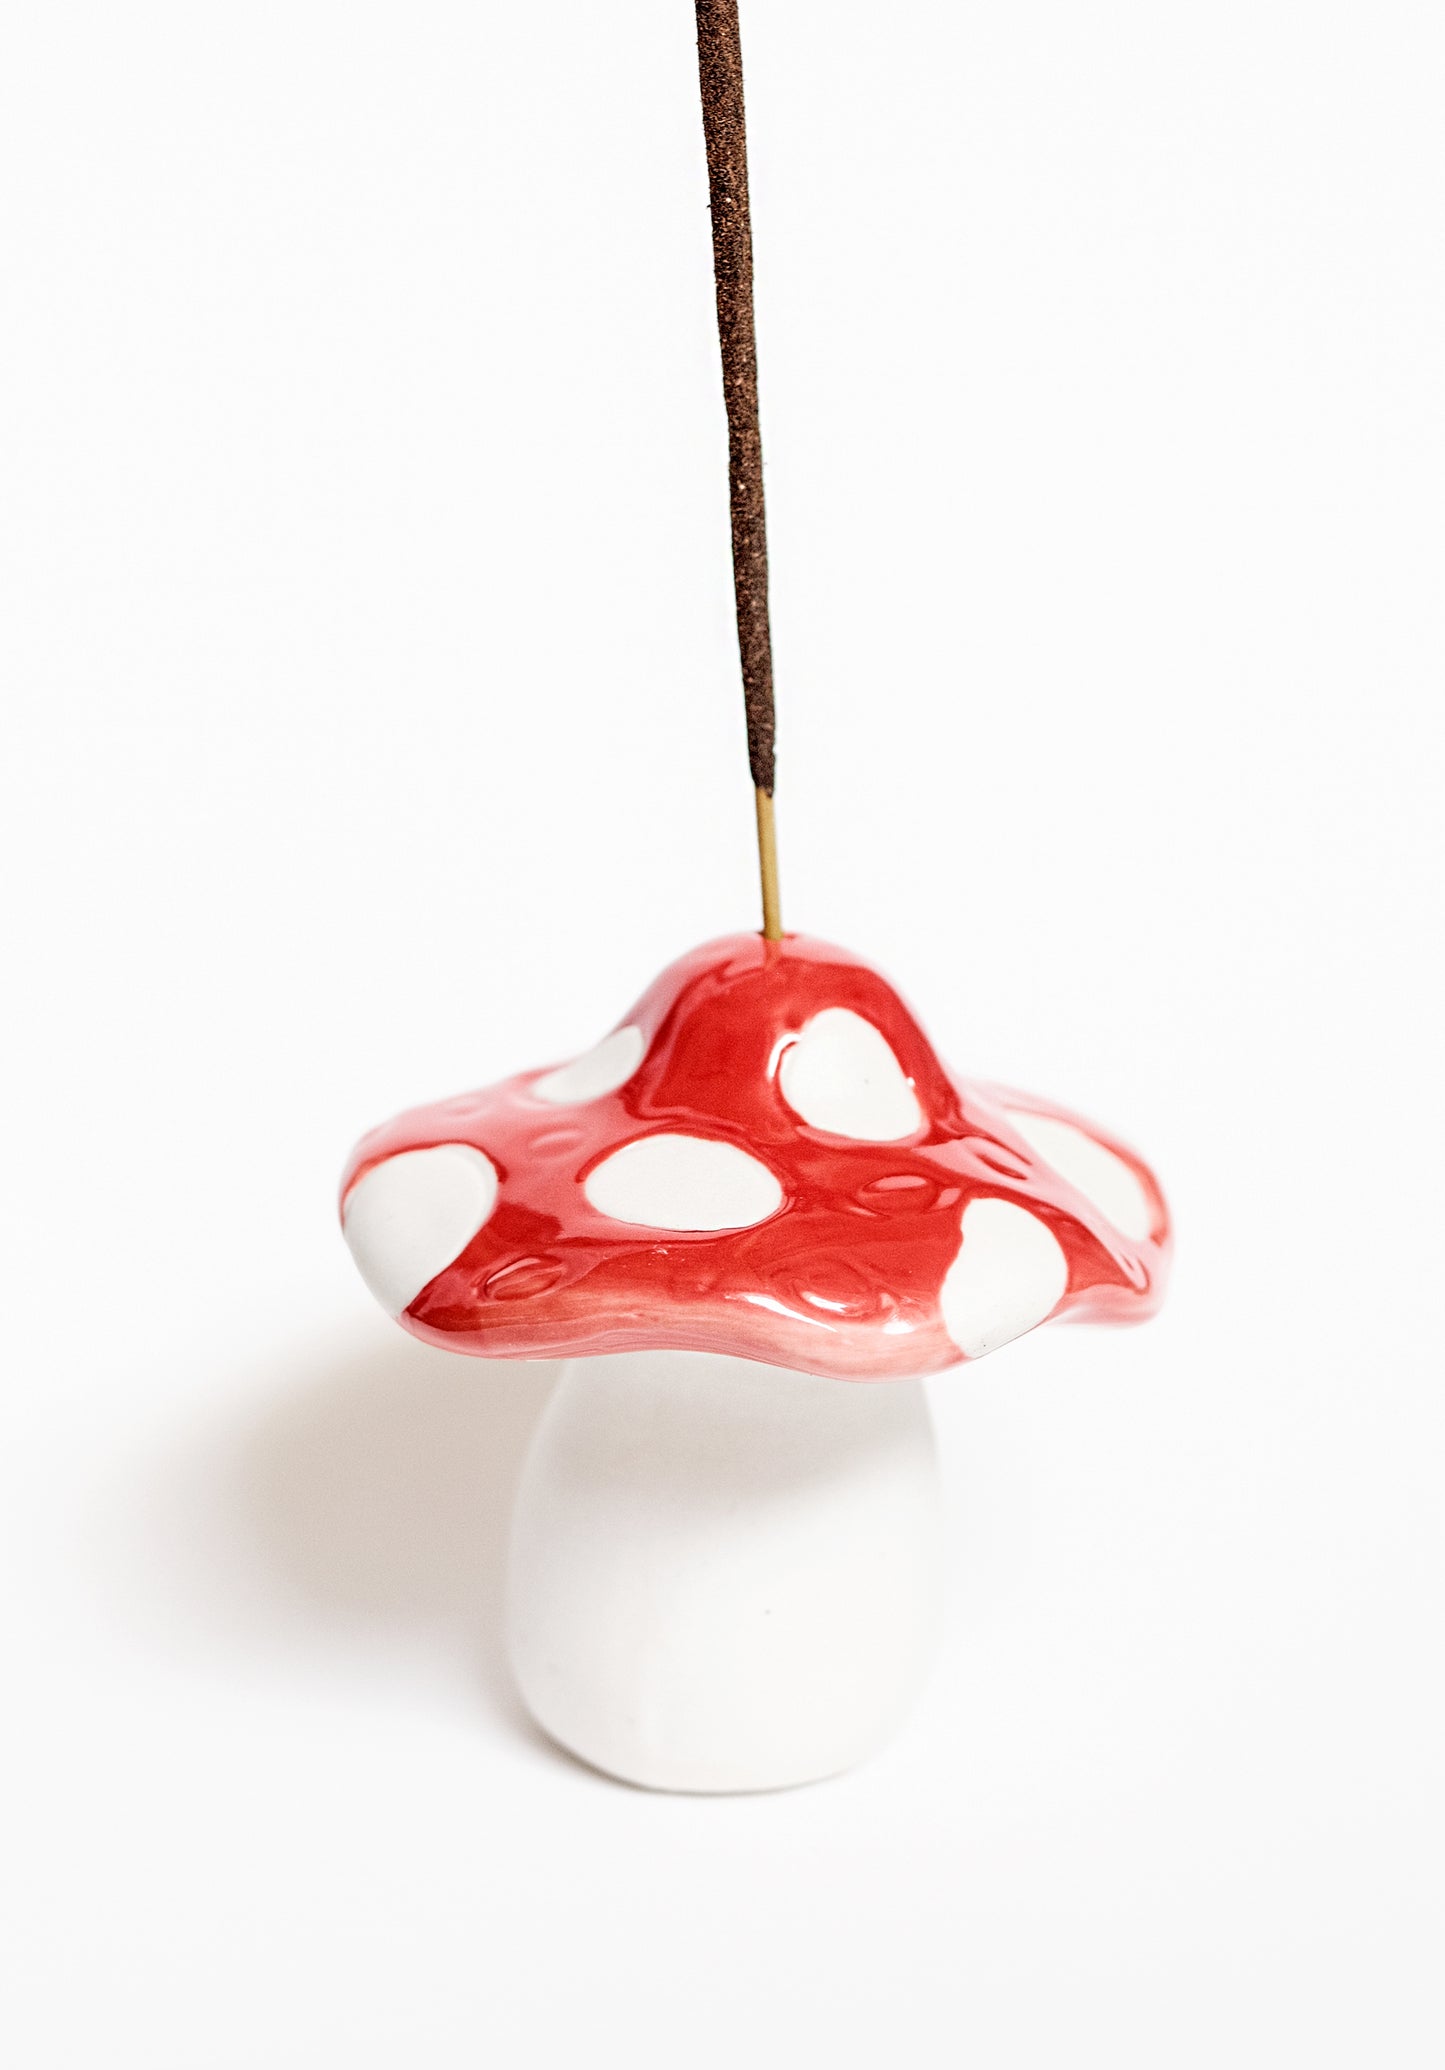 Mushroom Incense Holder - Mushroom Revival - With Incense Stick